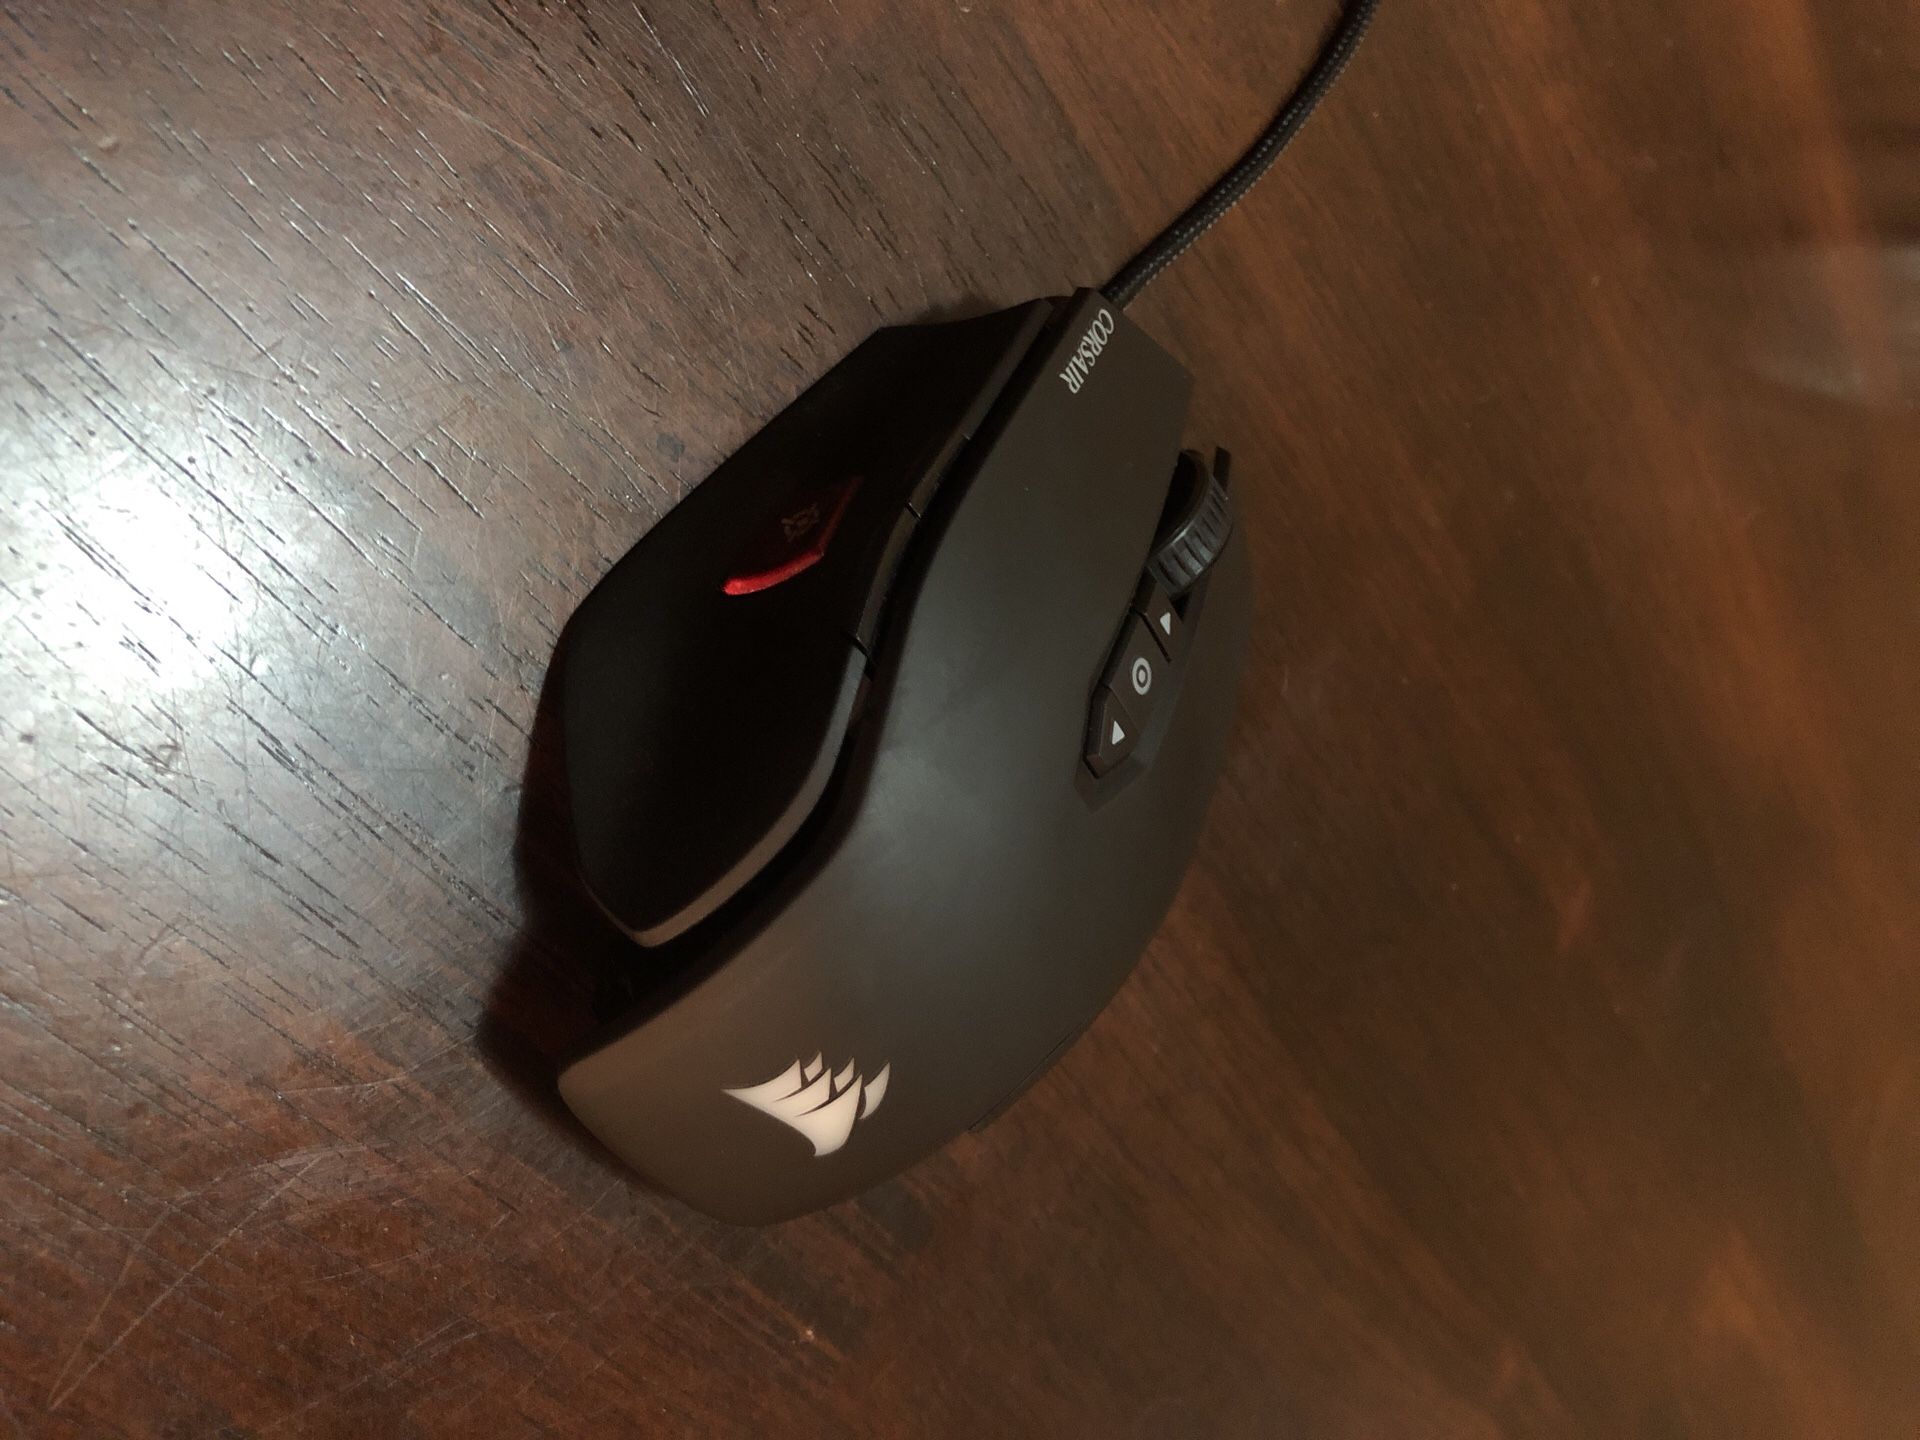 Corsair M65 gaming mouse